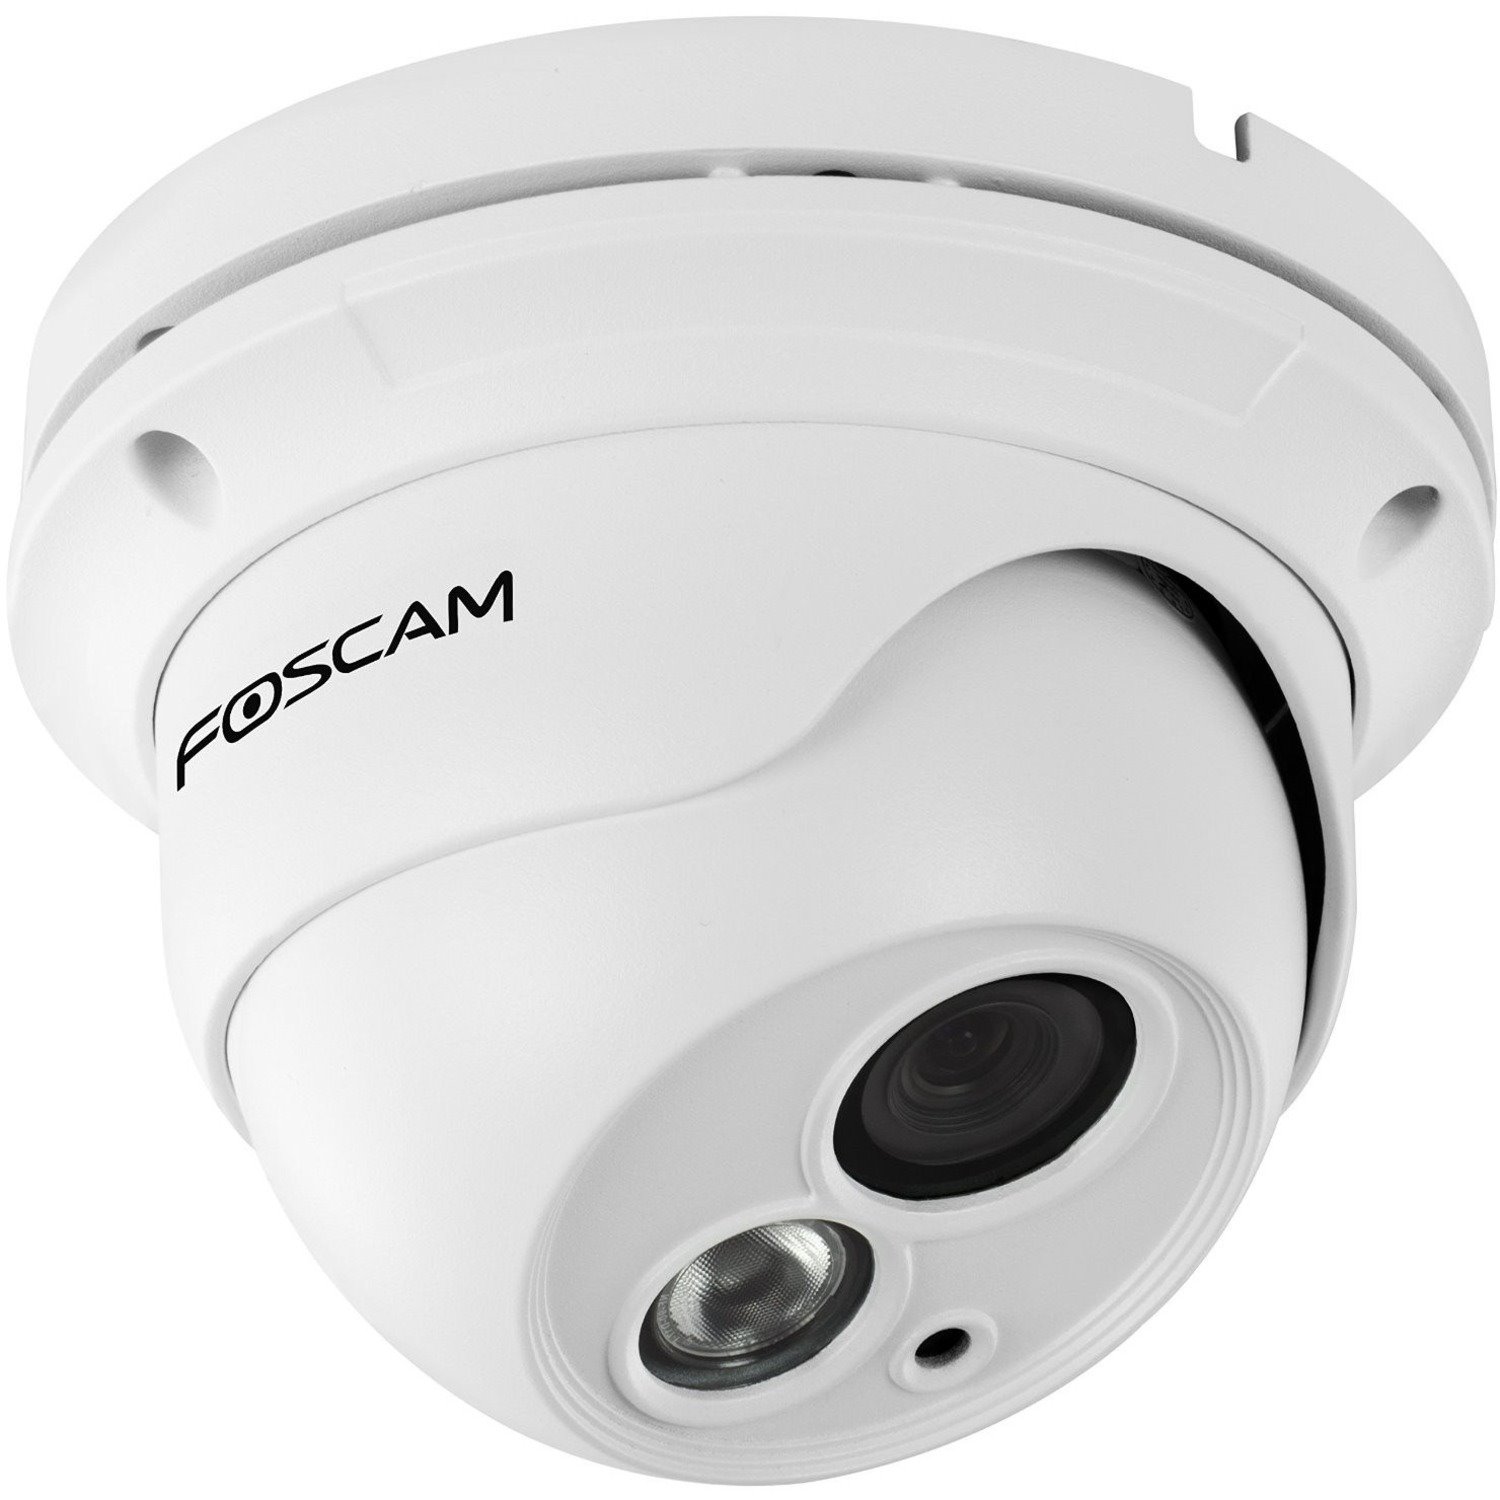 Foscam FI9853EP 1 Megapixel HD Network Camera - Colour - Dome